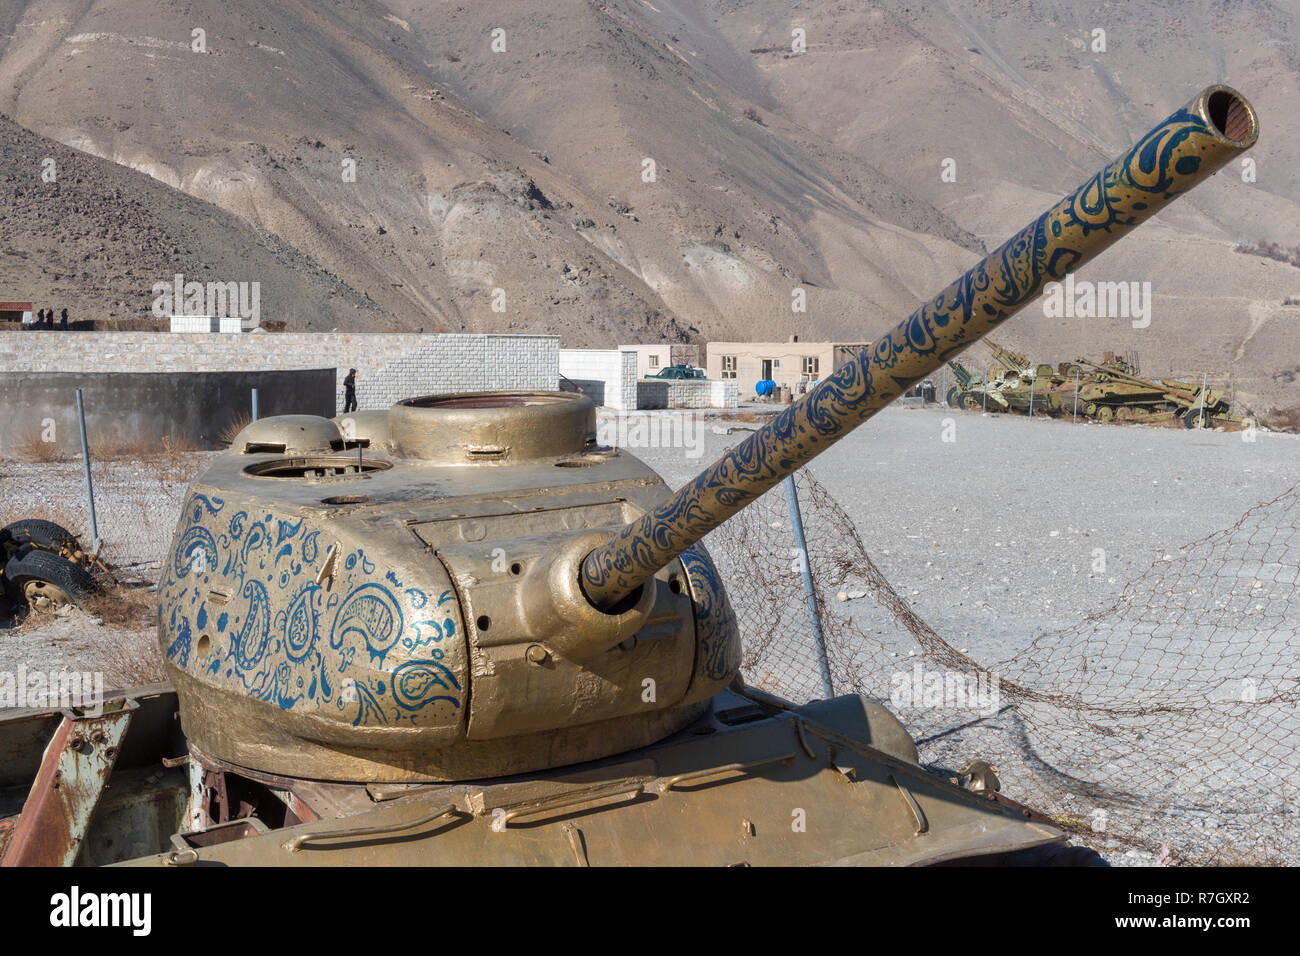 Soviet Tank Decorated By Artist Near Commander Massoud's Memorial, Panjshir Valley, Panjshir Province, Afghanistan Stock Photo